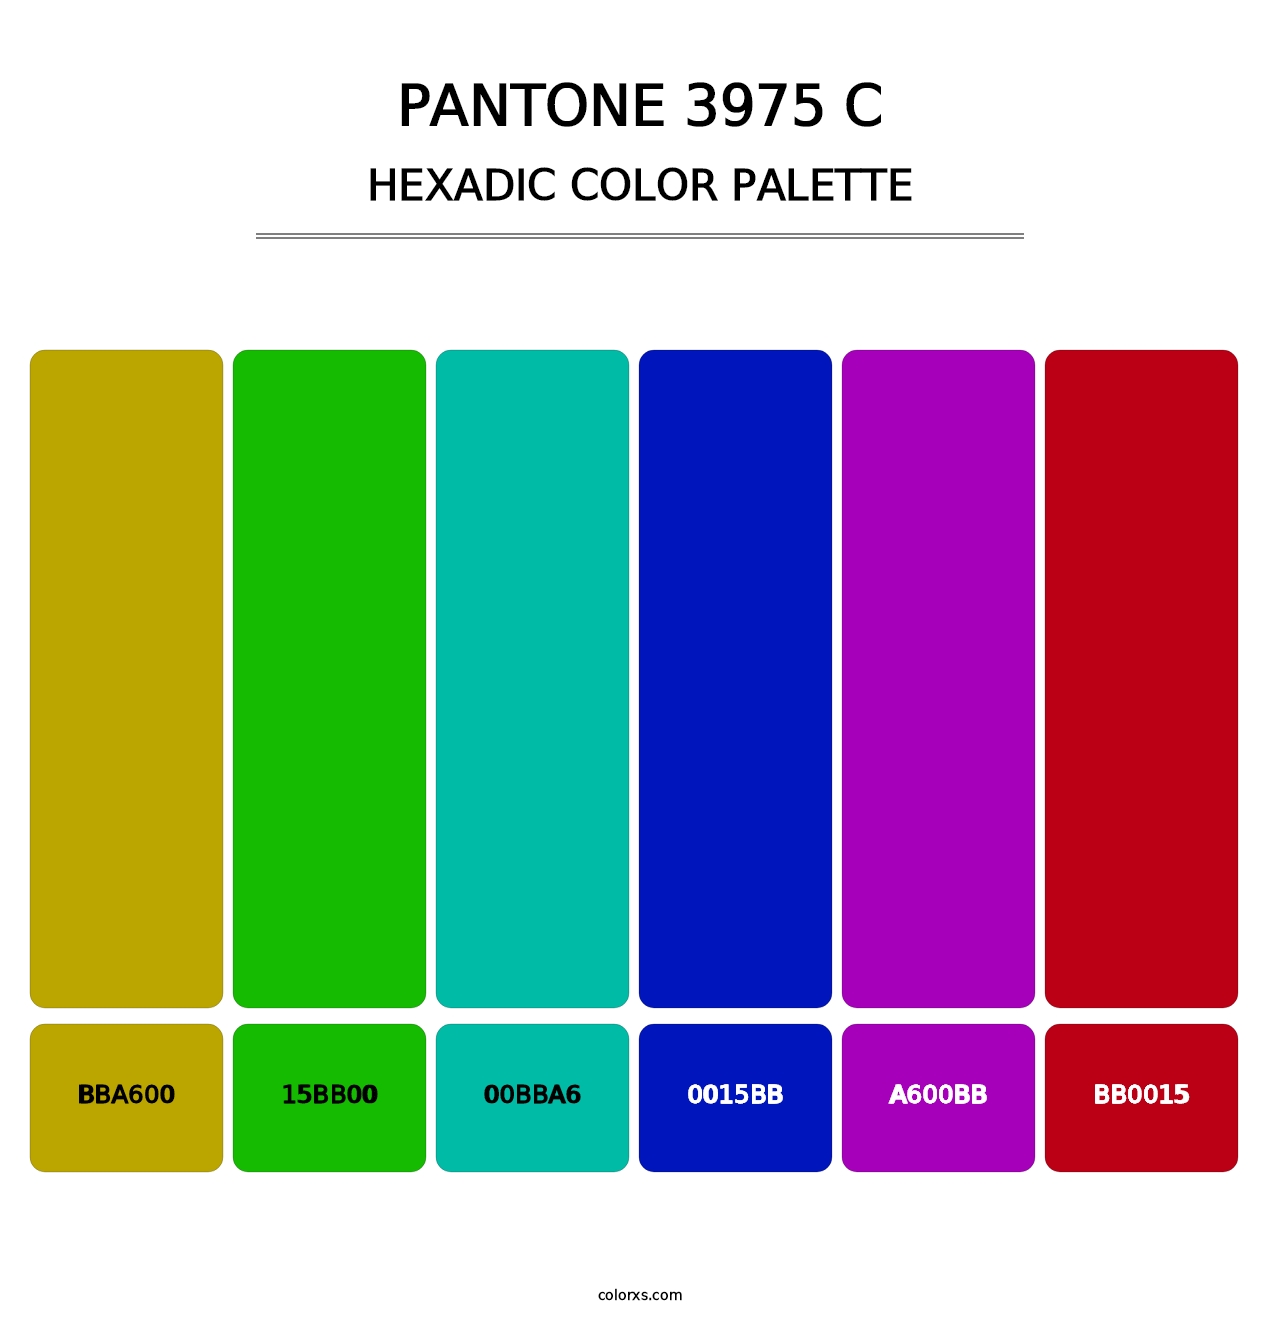 PANTONE 3975 C - Hexadic Color Palette